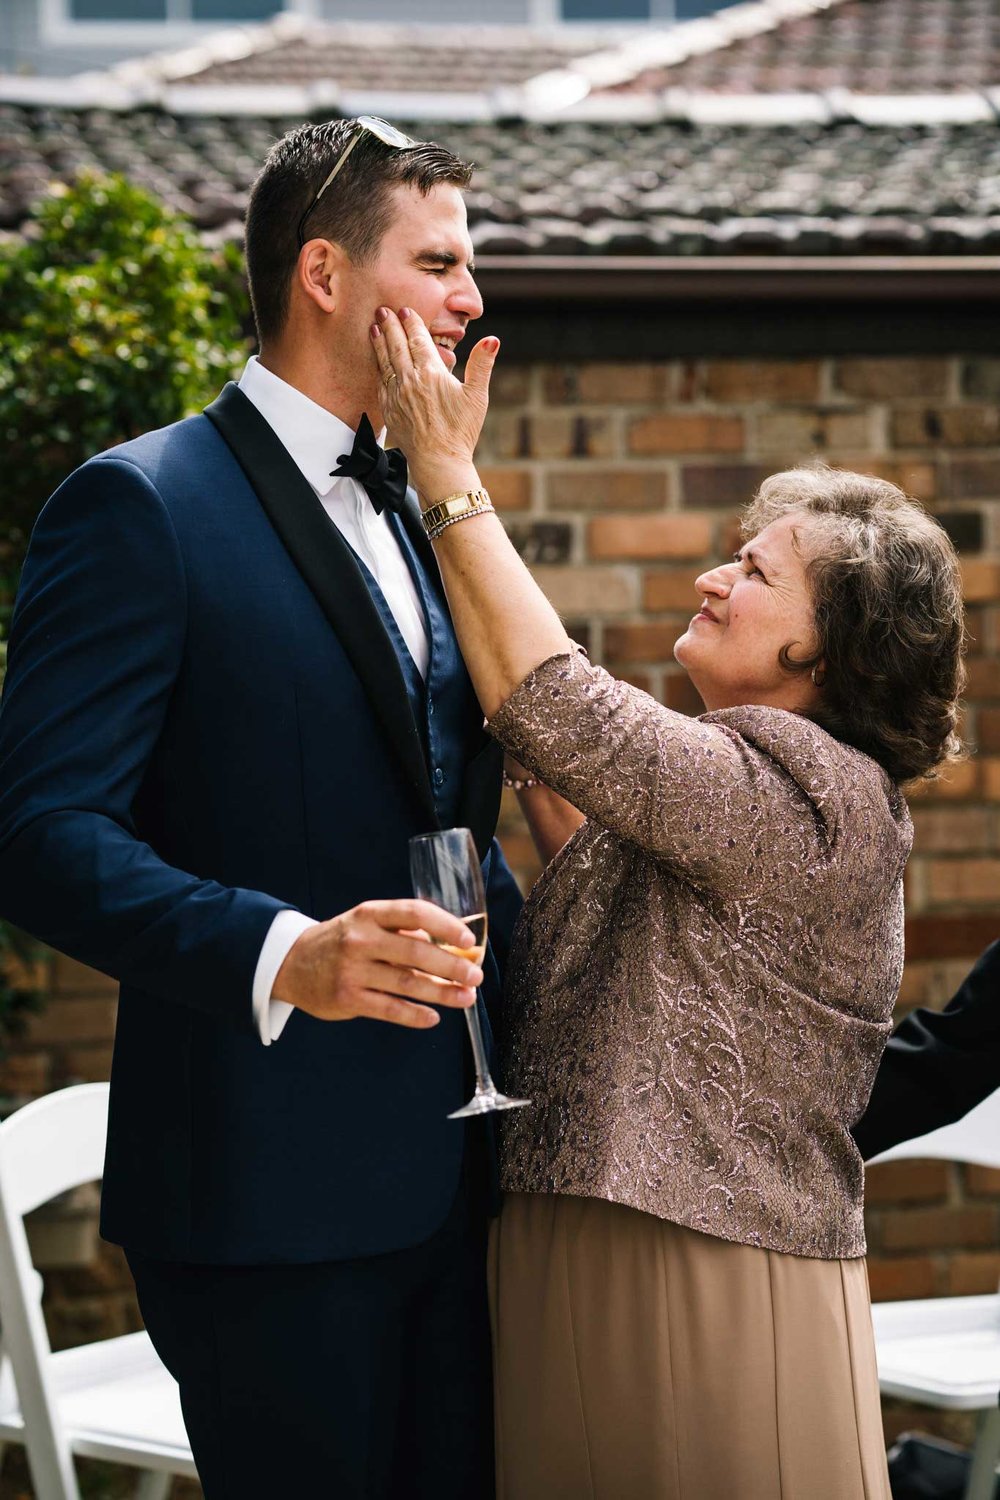 Grandmother playfully slaps groom on the cheek